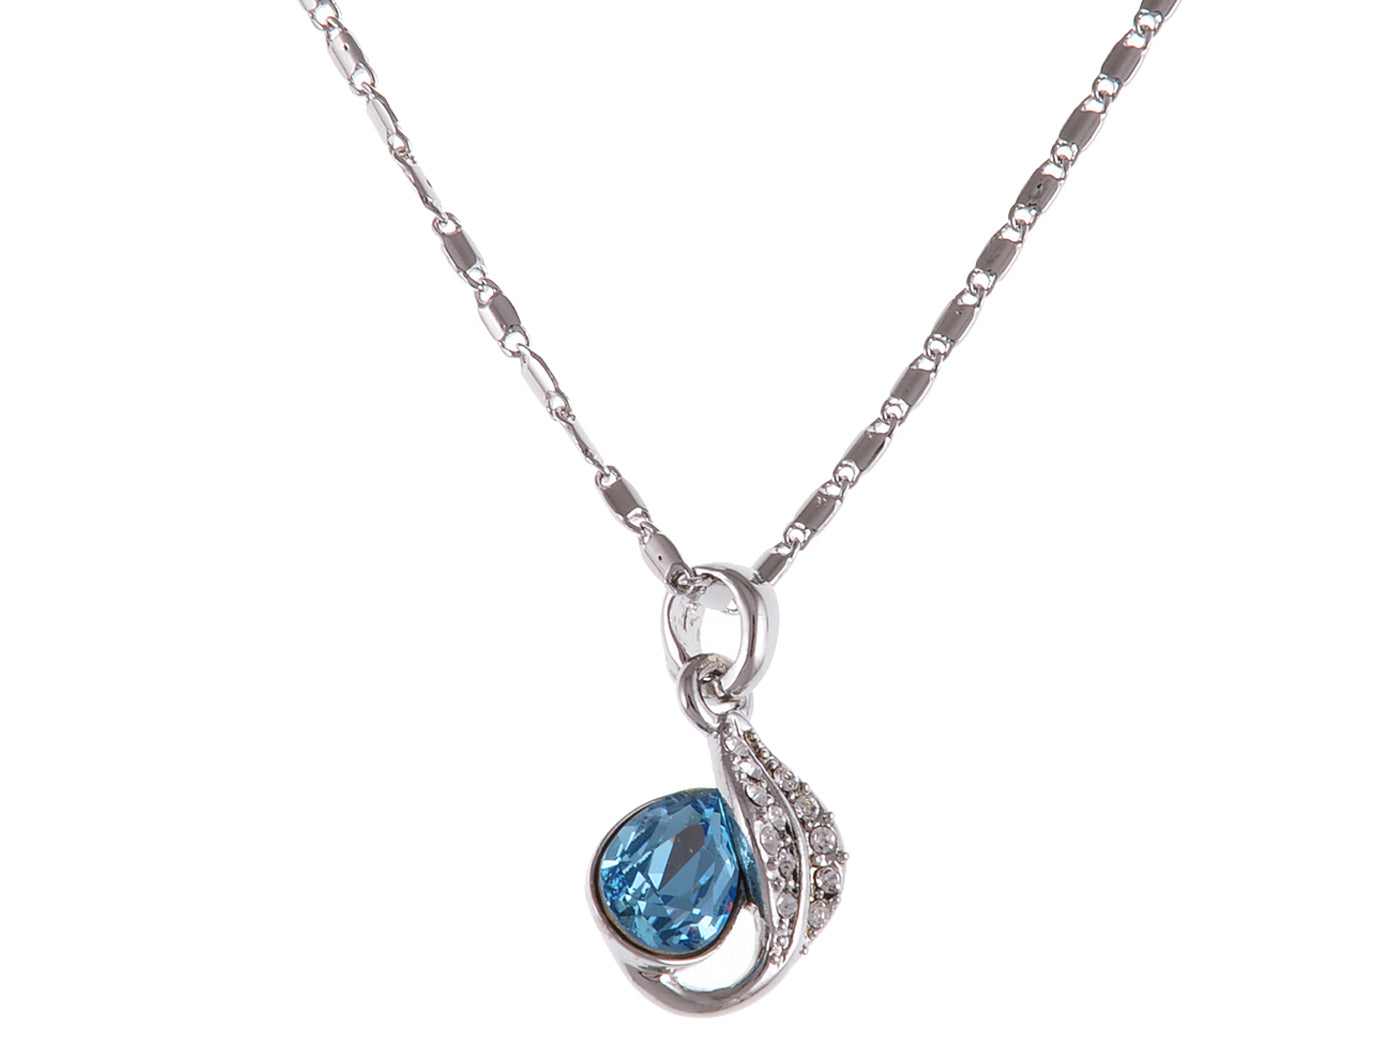 Swarovski Crystal Elements Light Sapphire Teardrop Leaf Charm Pendant Necklace